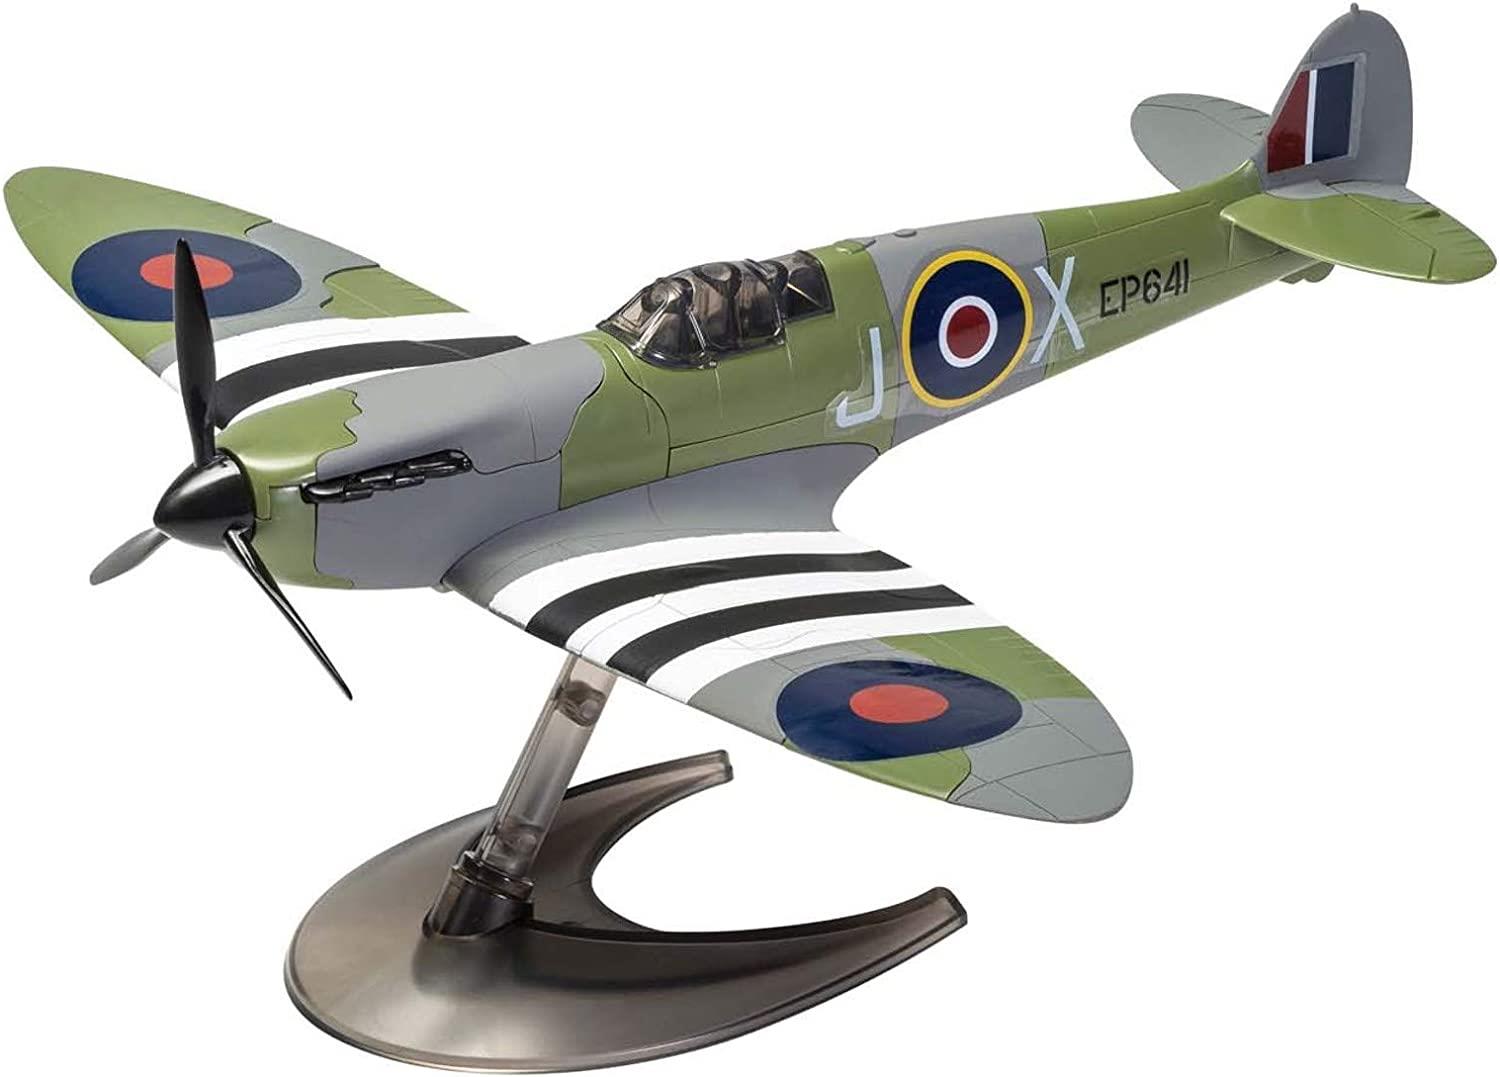 Airfix QUICKBUILD D-Day Spitfire